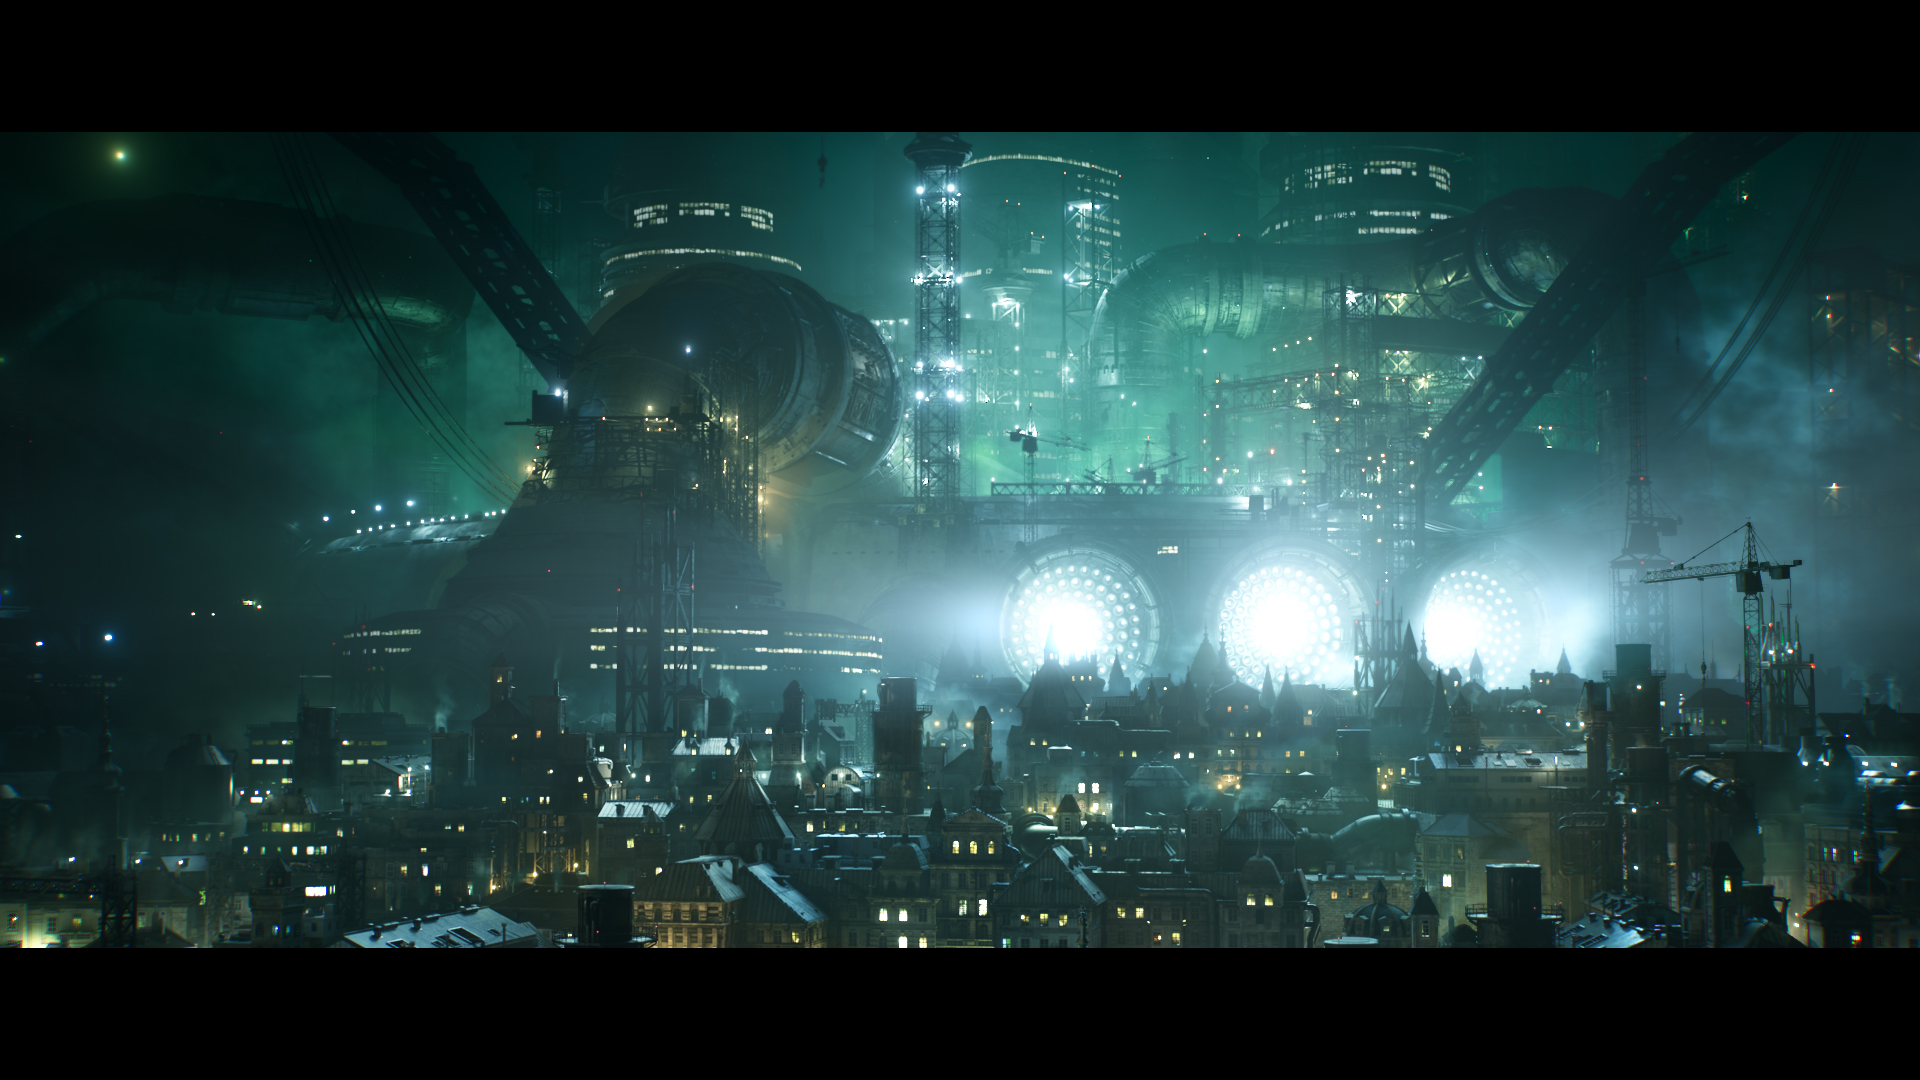 Final Fantasy VII Remake PS4 trailer screenshot